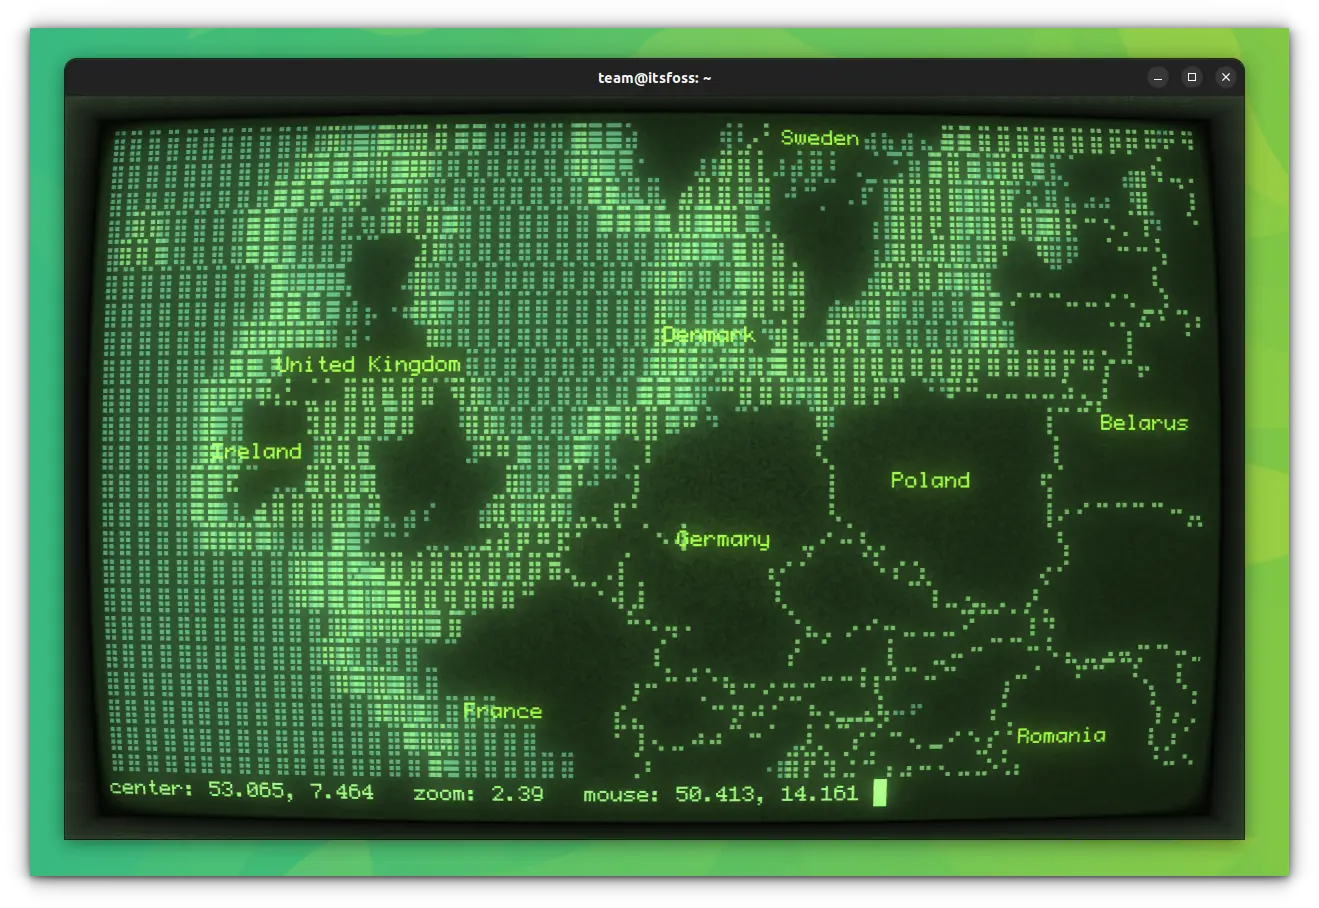 Cool Retro Term showing Mapscii, the ASCII Map